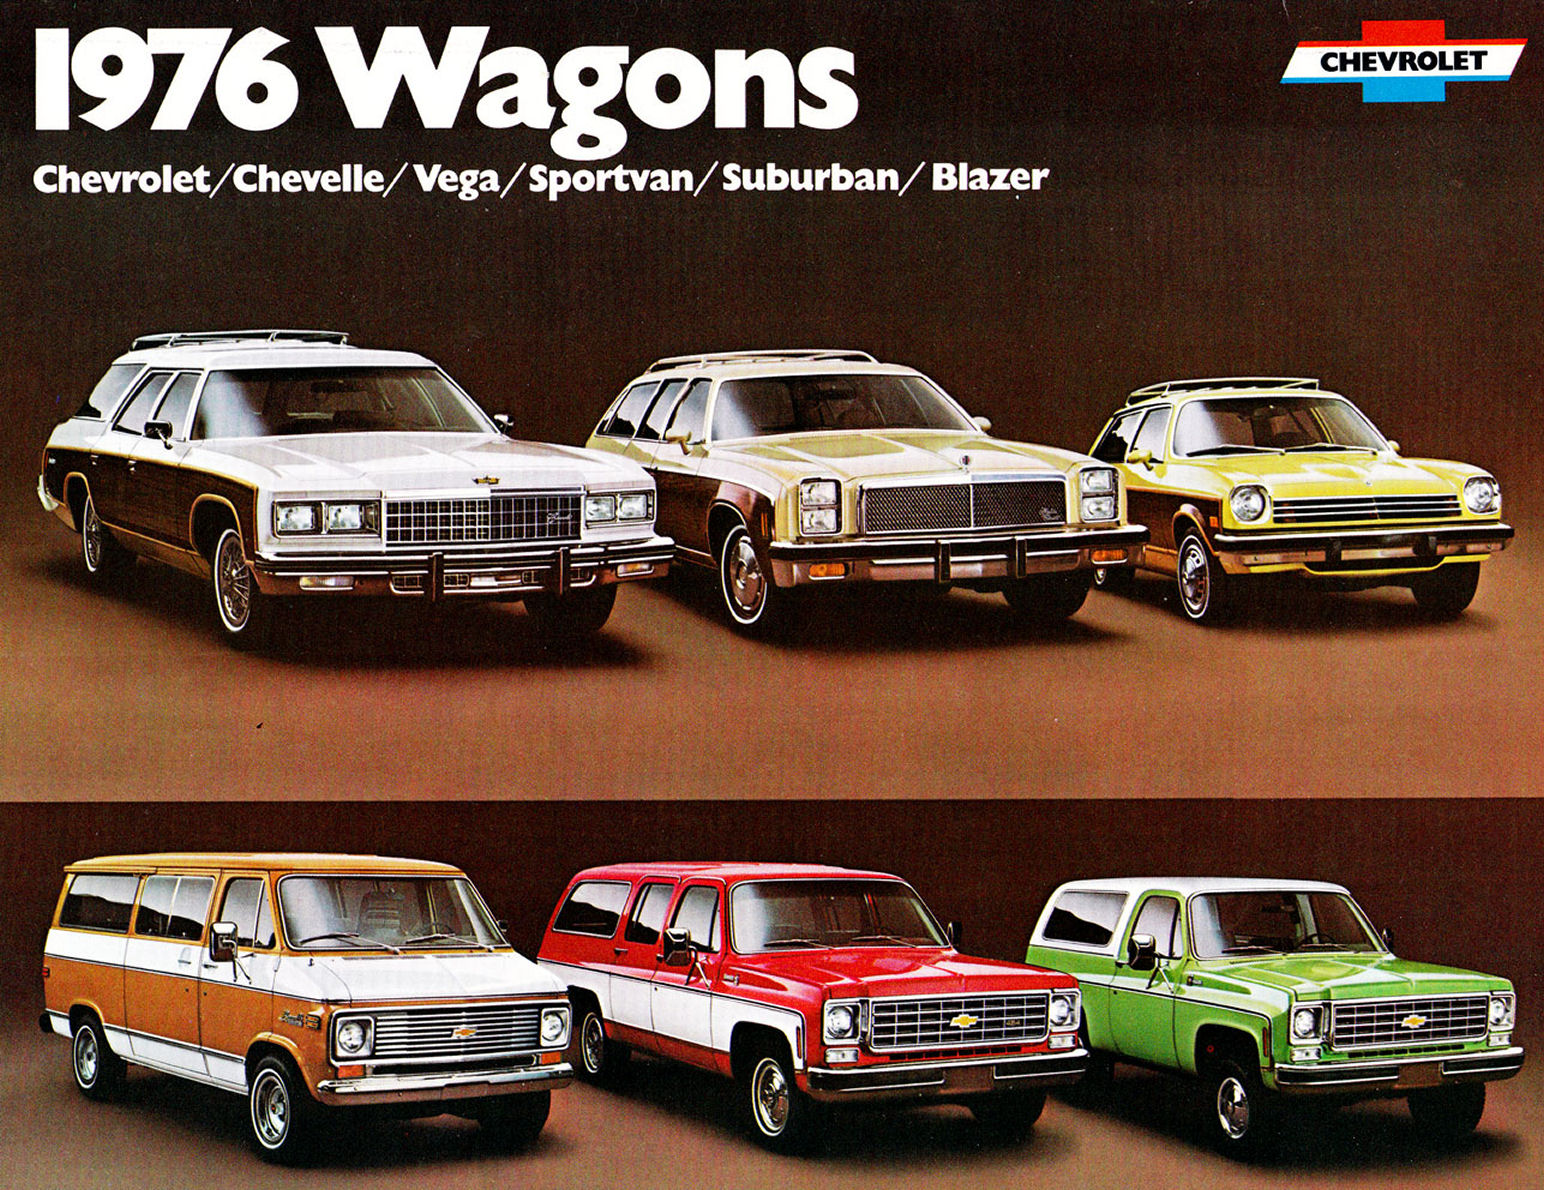 1976_Chevrolet_Wagons-01